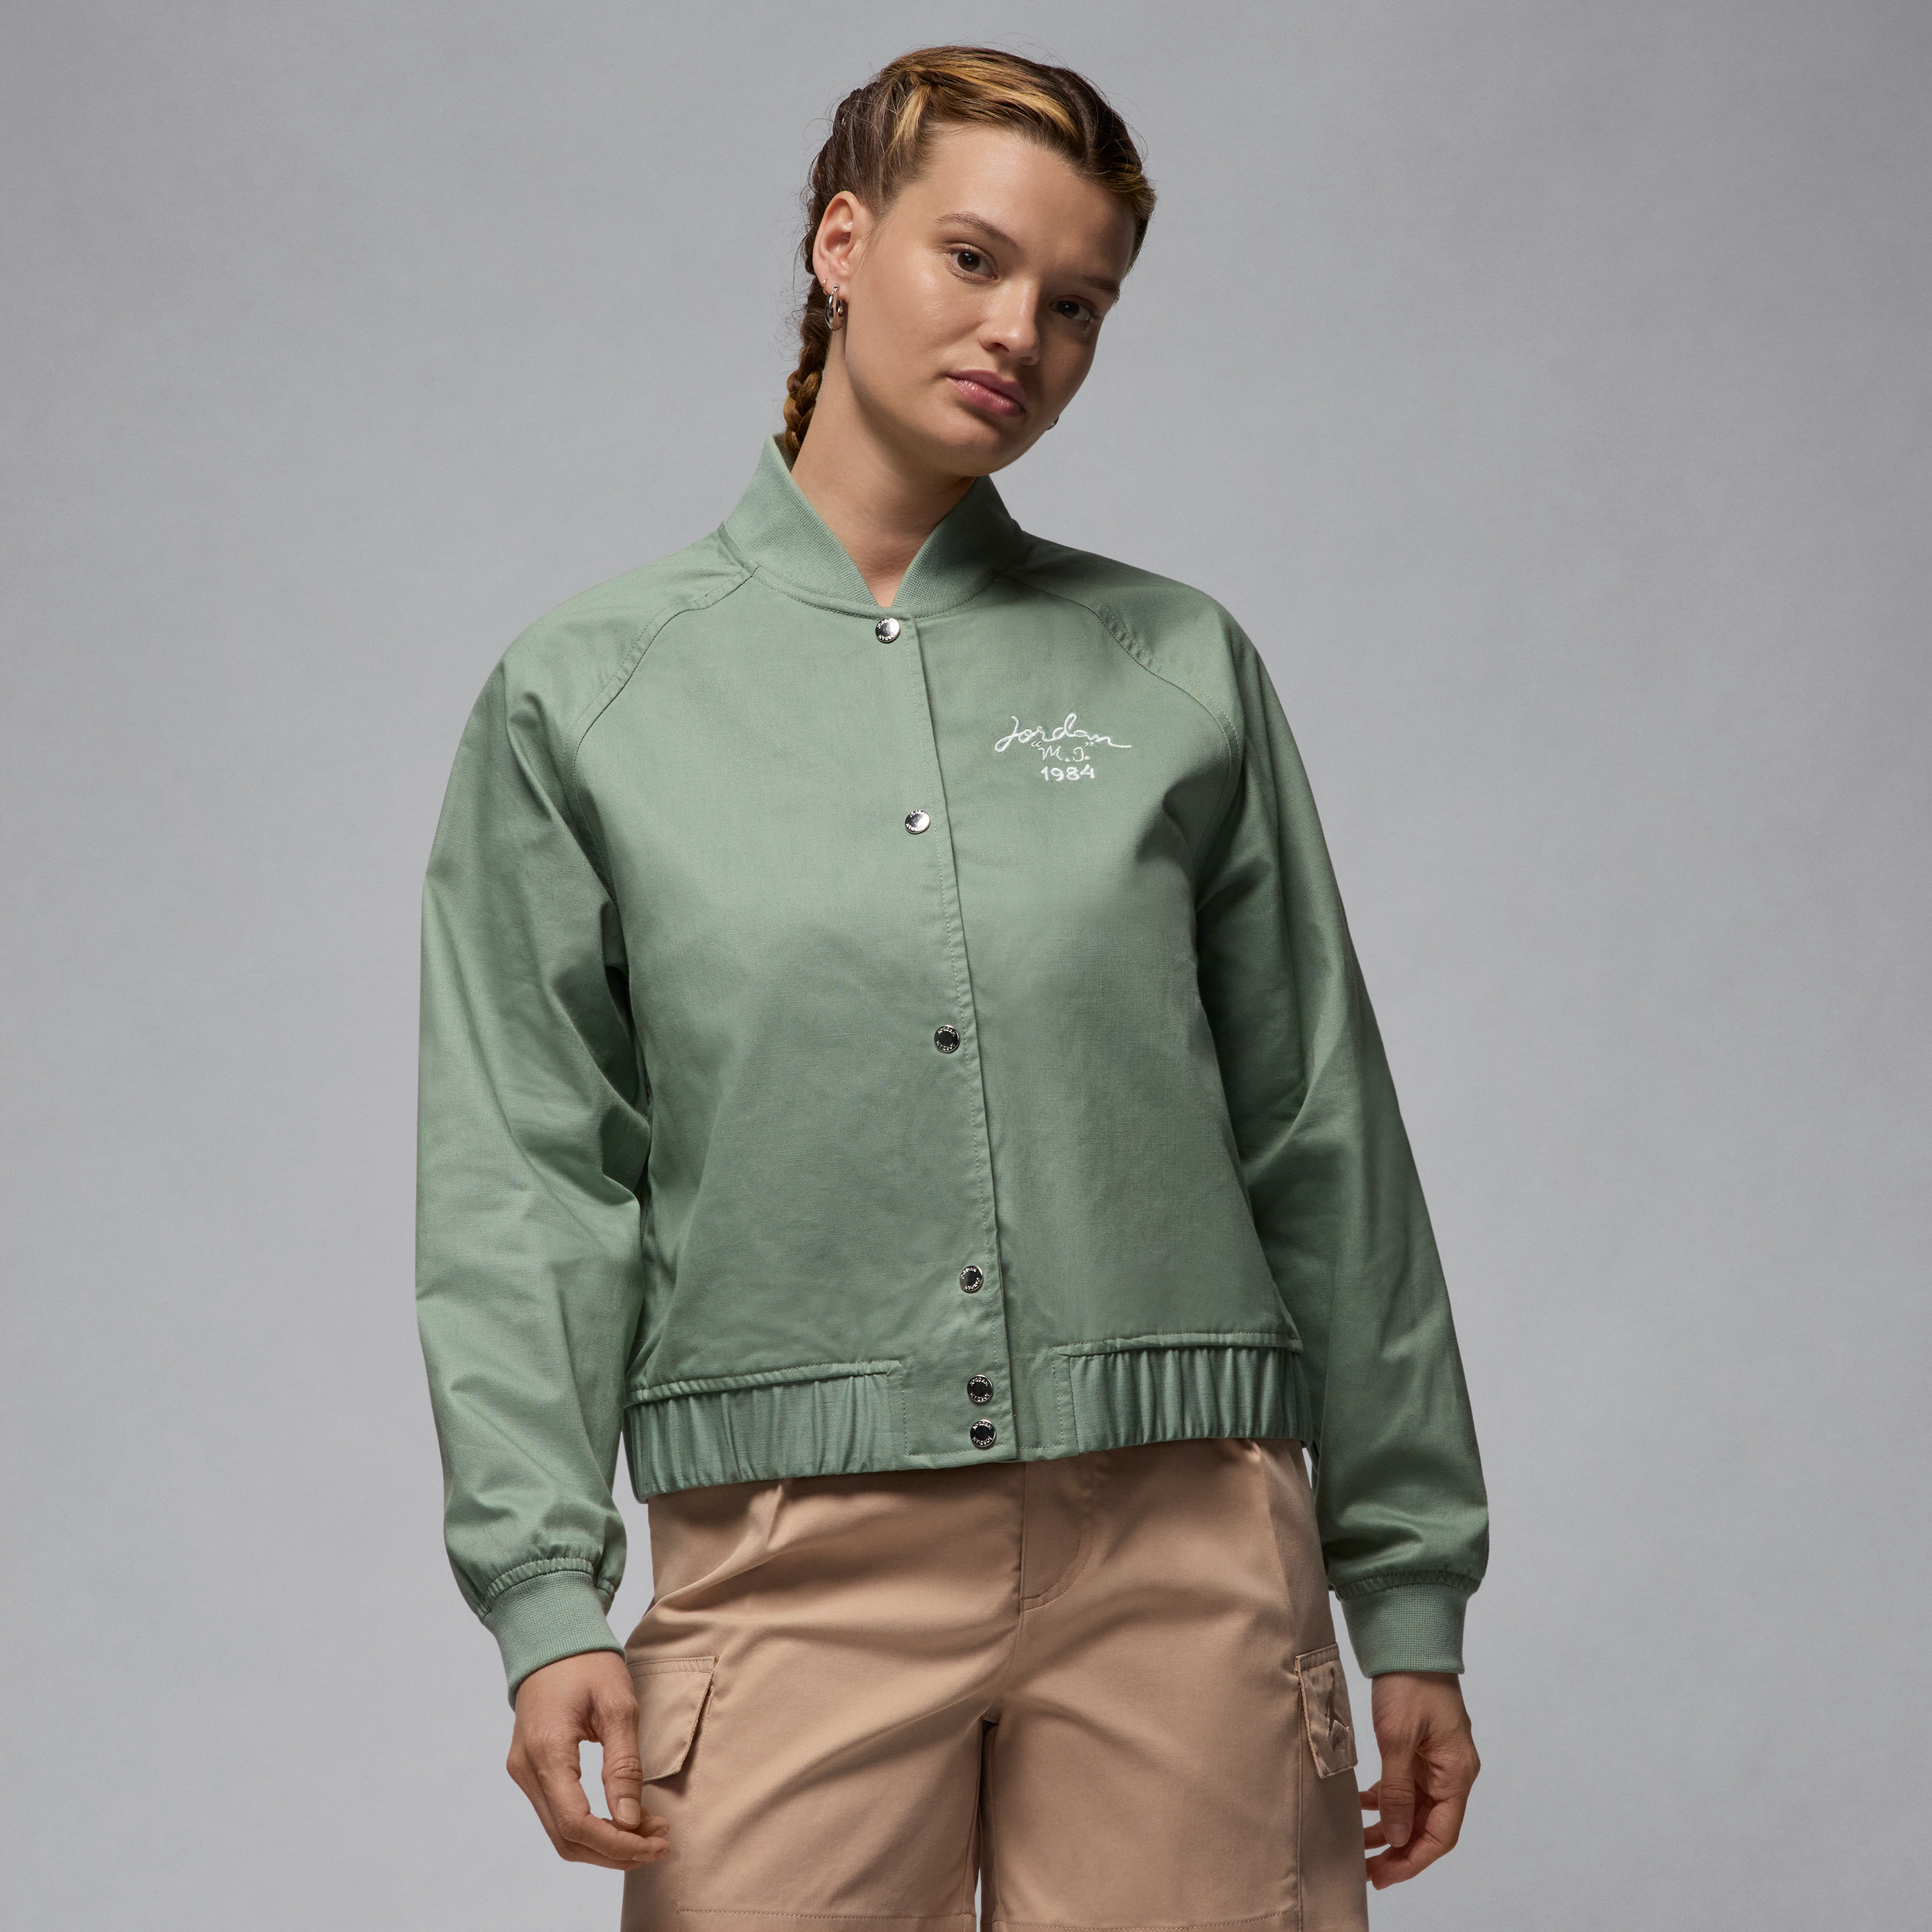 jordan giacca stile college  – donna - verde